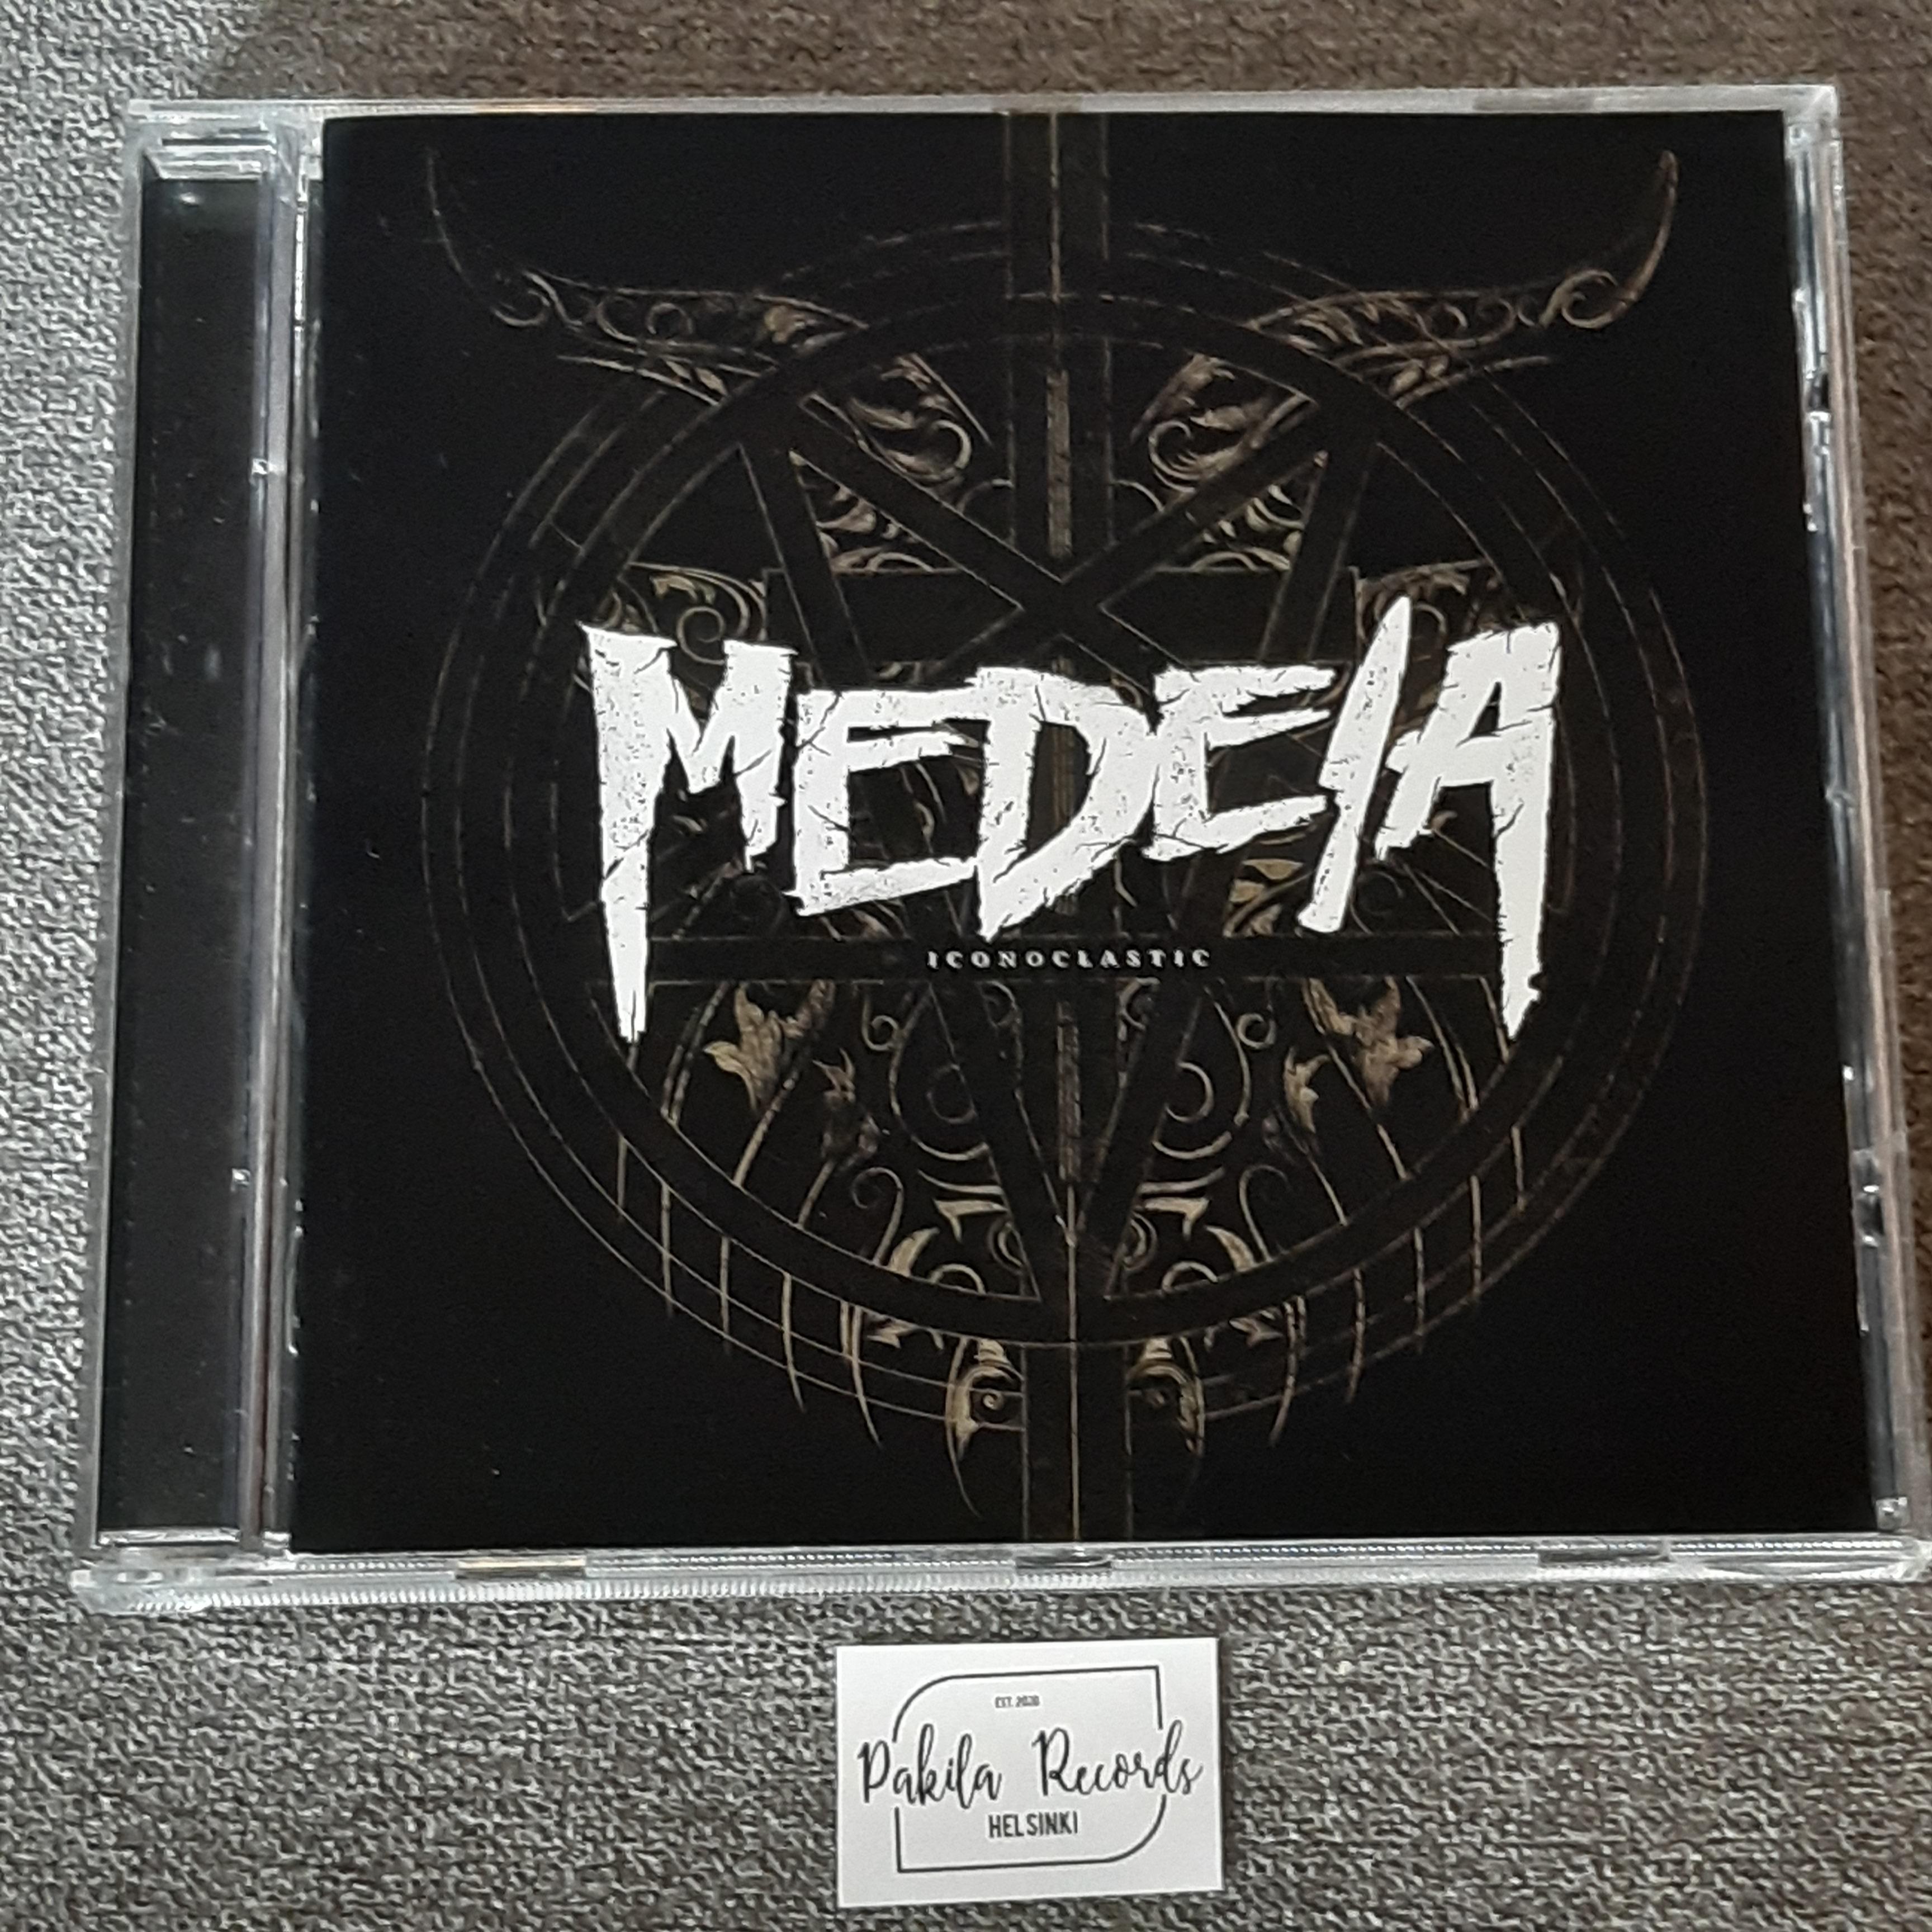 Medeia - Iconoclastic - CD (käytetty)